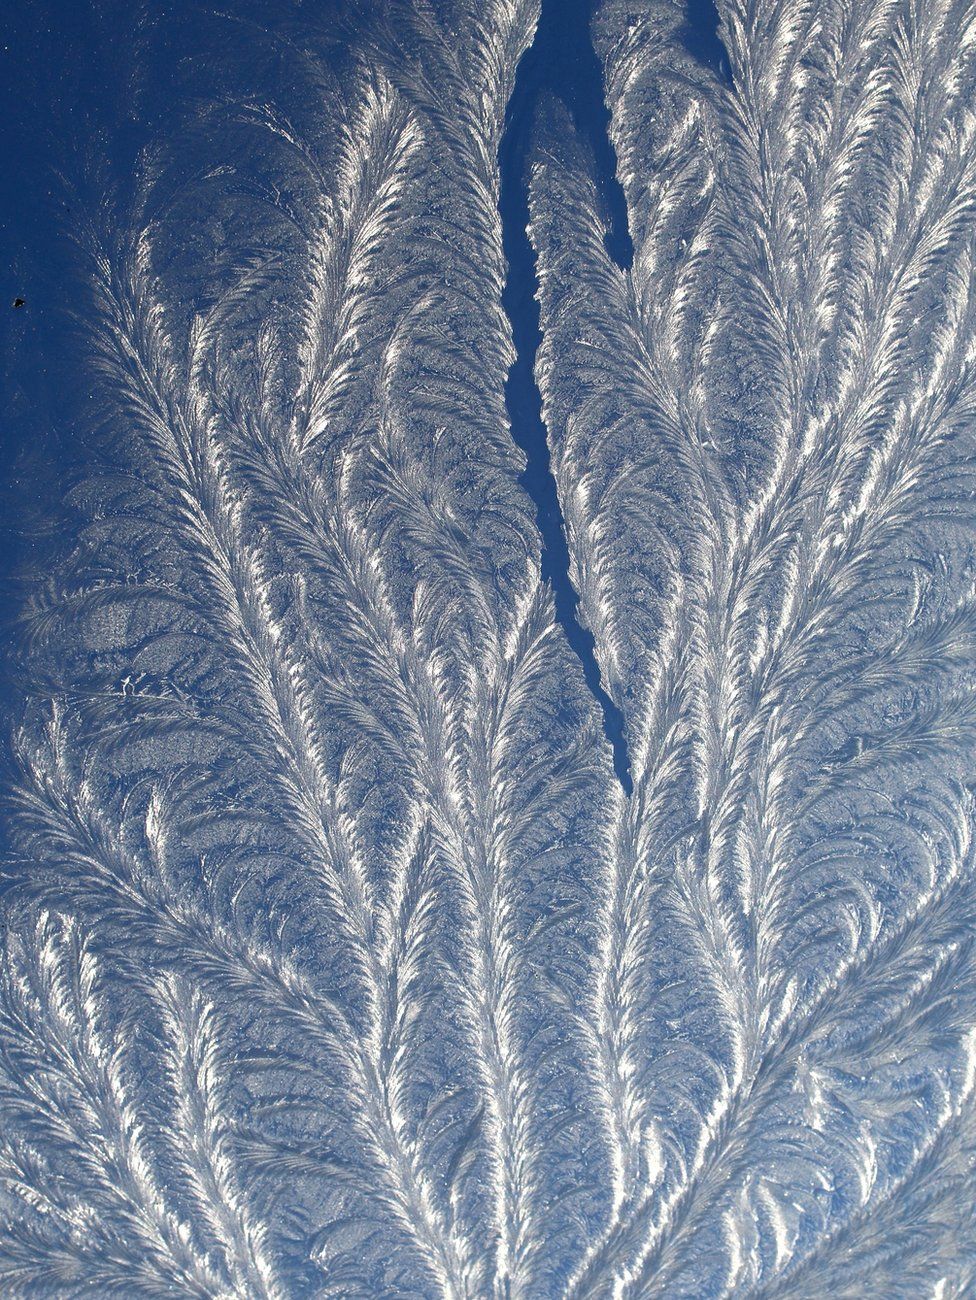 Frost on roof window